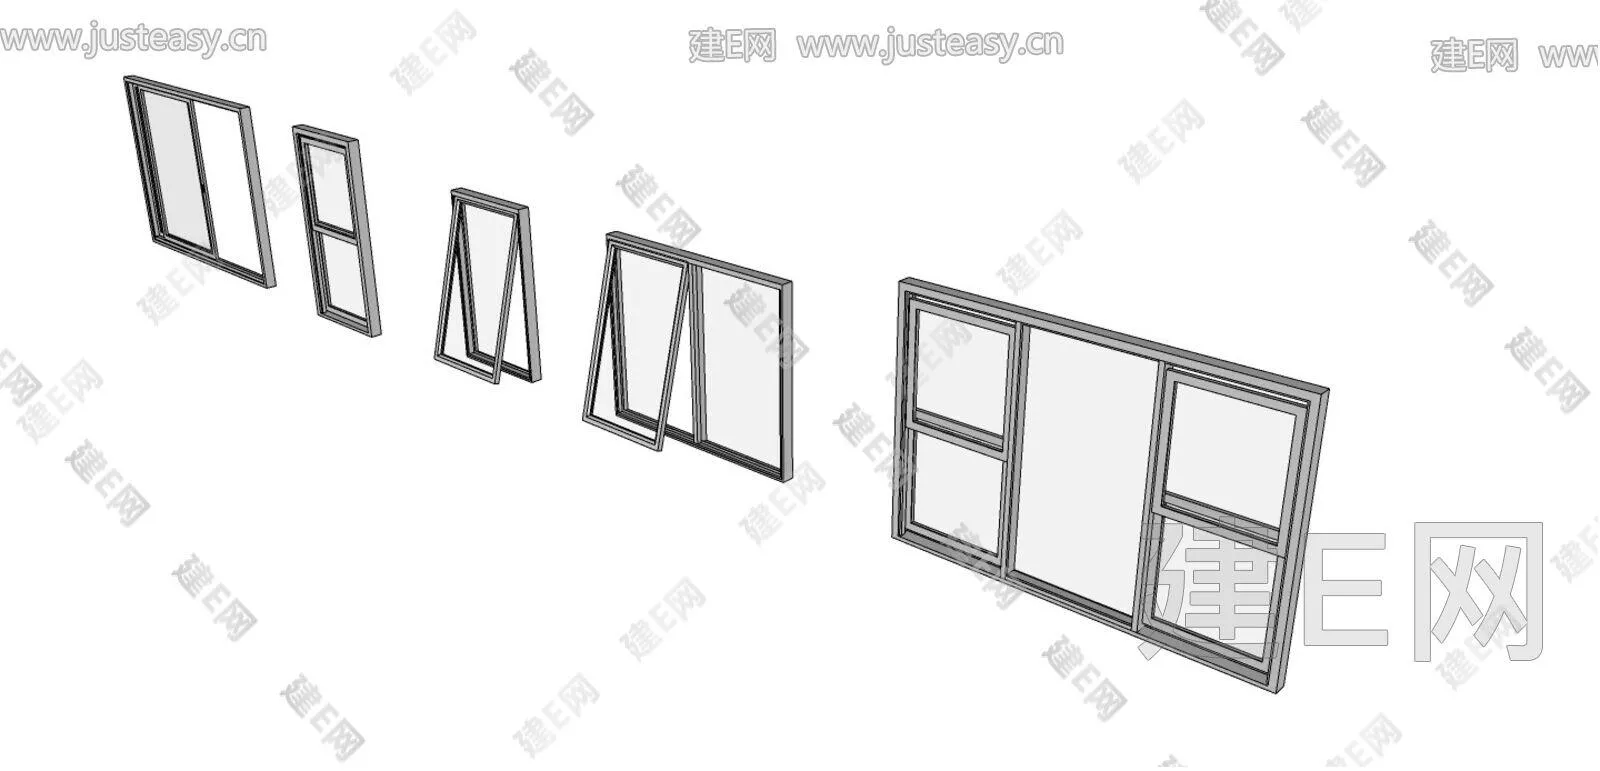 MODERN DOOR AND WINDOWS - SKETCHUP 3D MODEL - ENSCAPE - 111231451